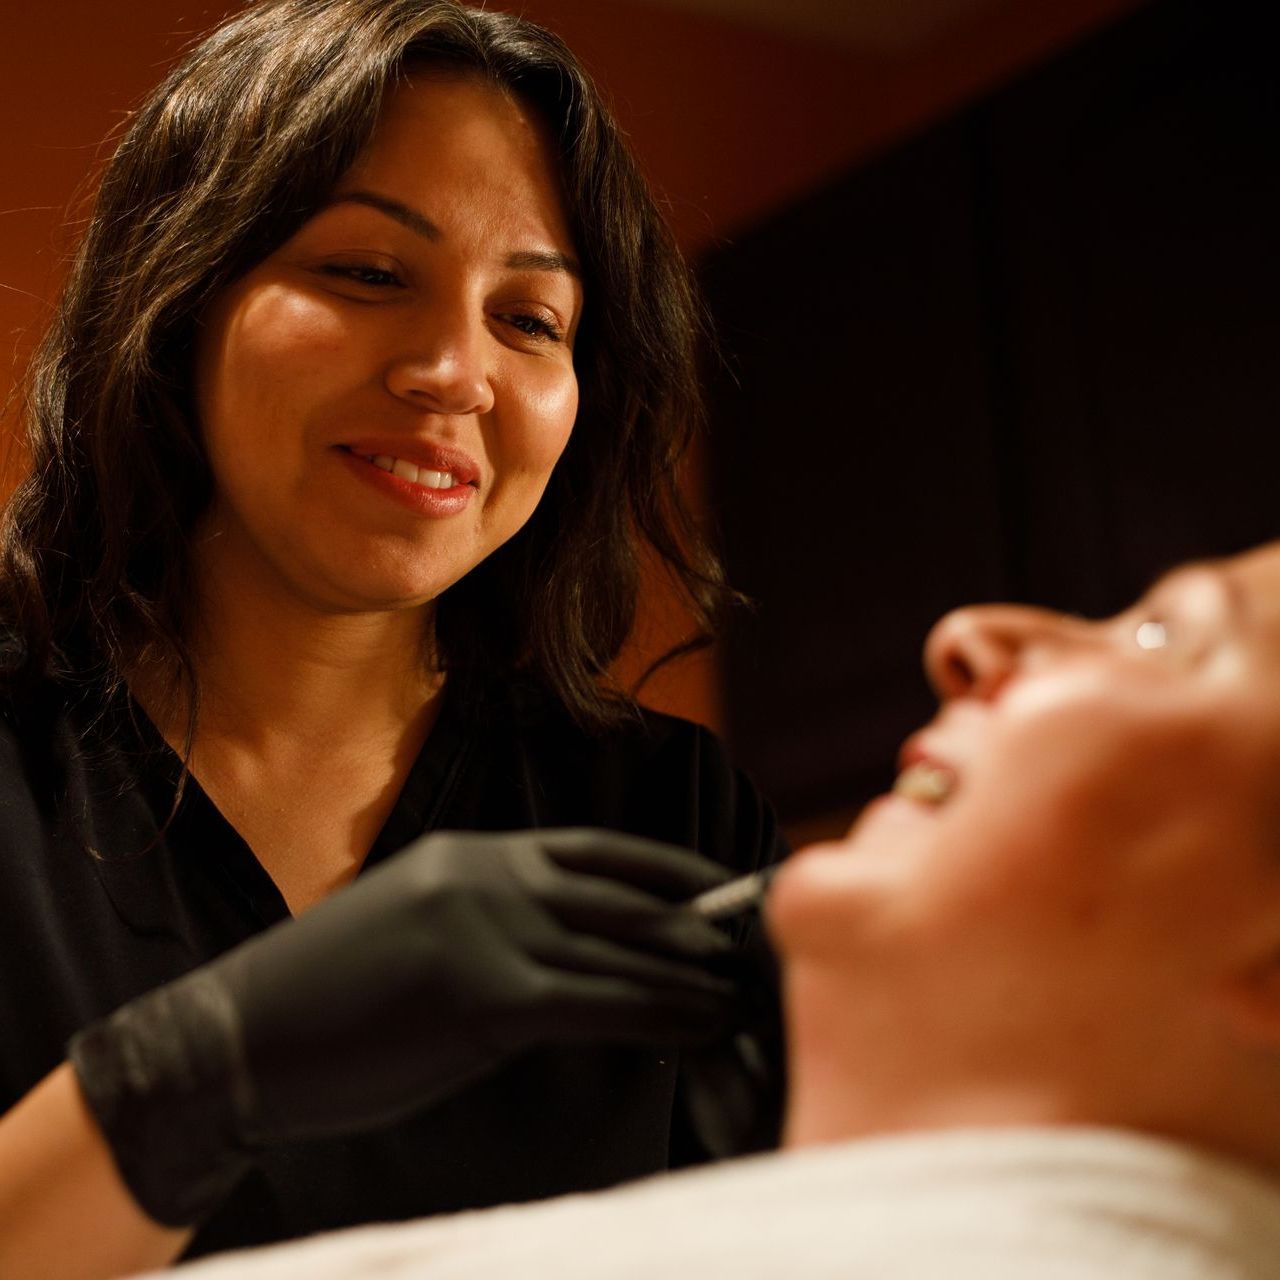 A woman receiving a Lumecca treatment